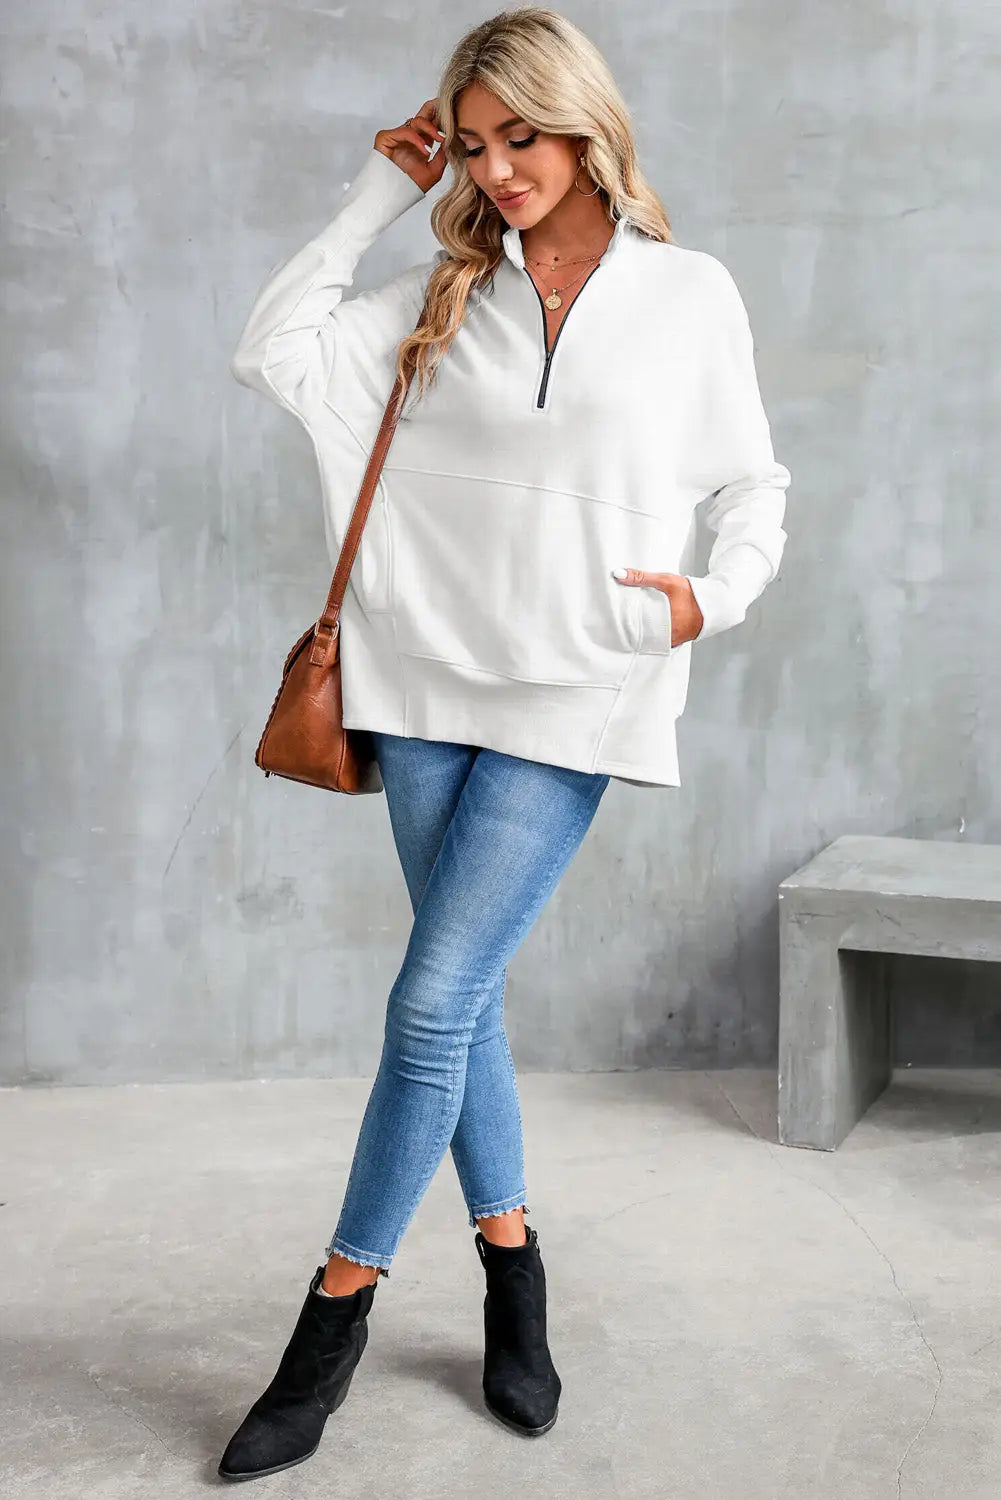 White oversized quarter-zip pullover sweatshirt - sweatshirts & hoodies